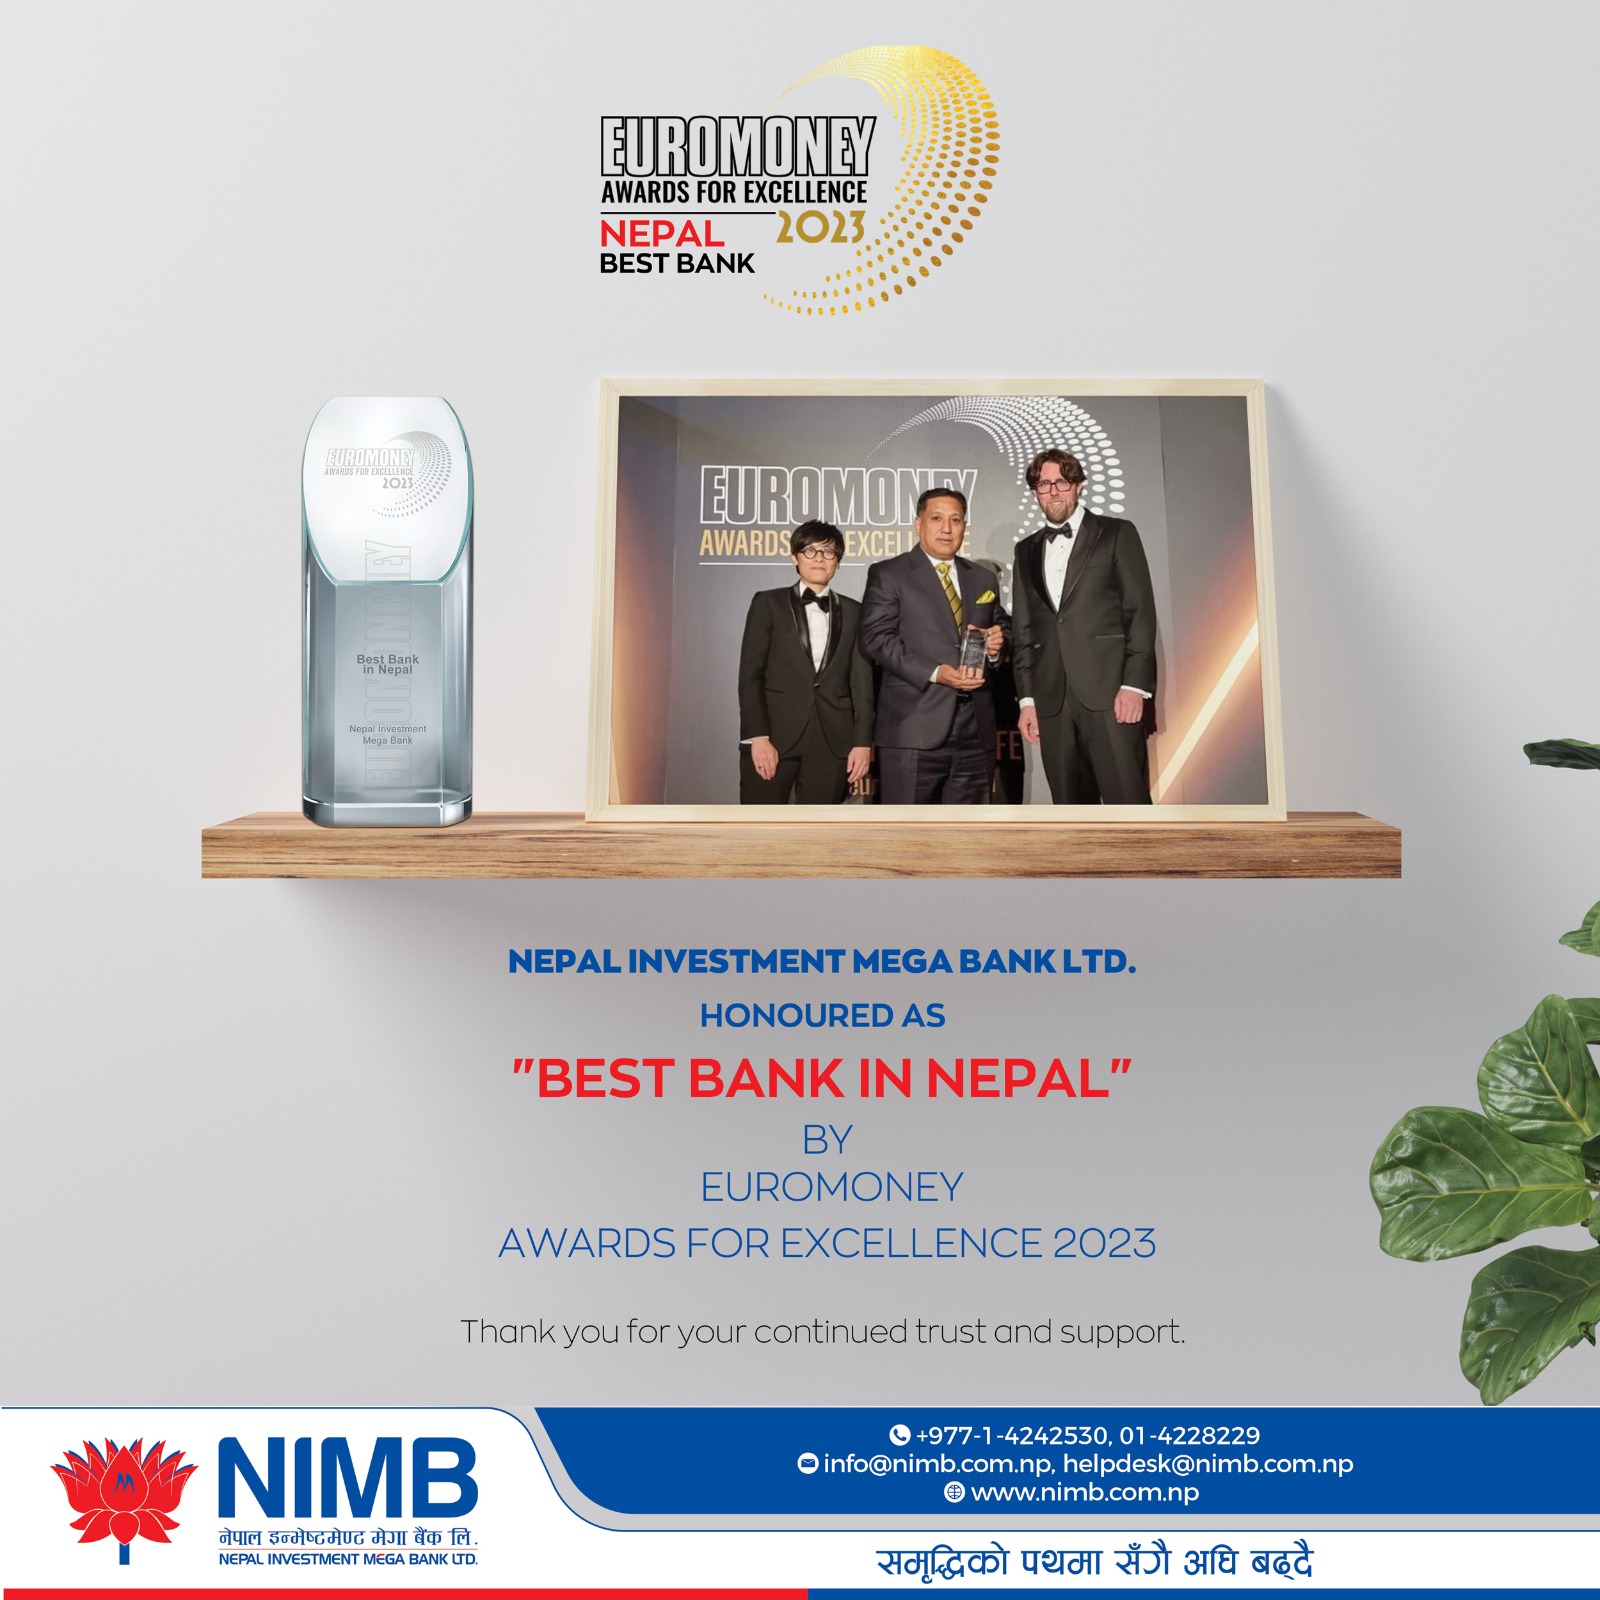 नेपाल इन्भेष्टमेन्ट मेगा बैंक तेस्रो पटक युरोमनी अवार्डबाट सम्मानित